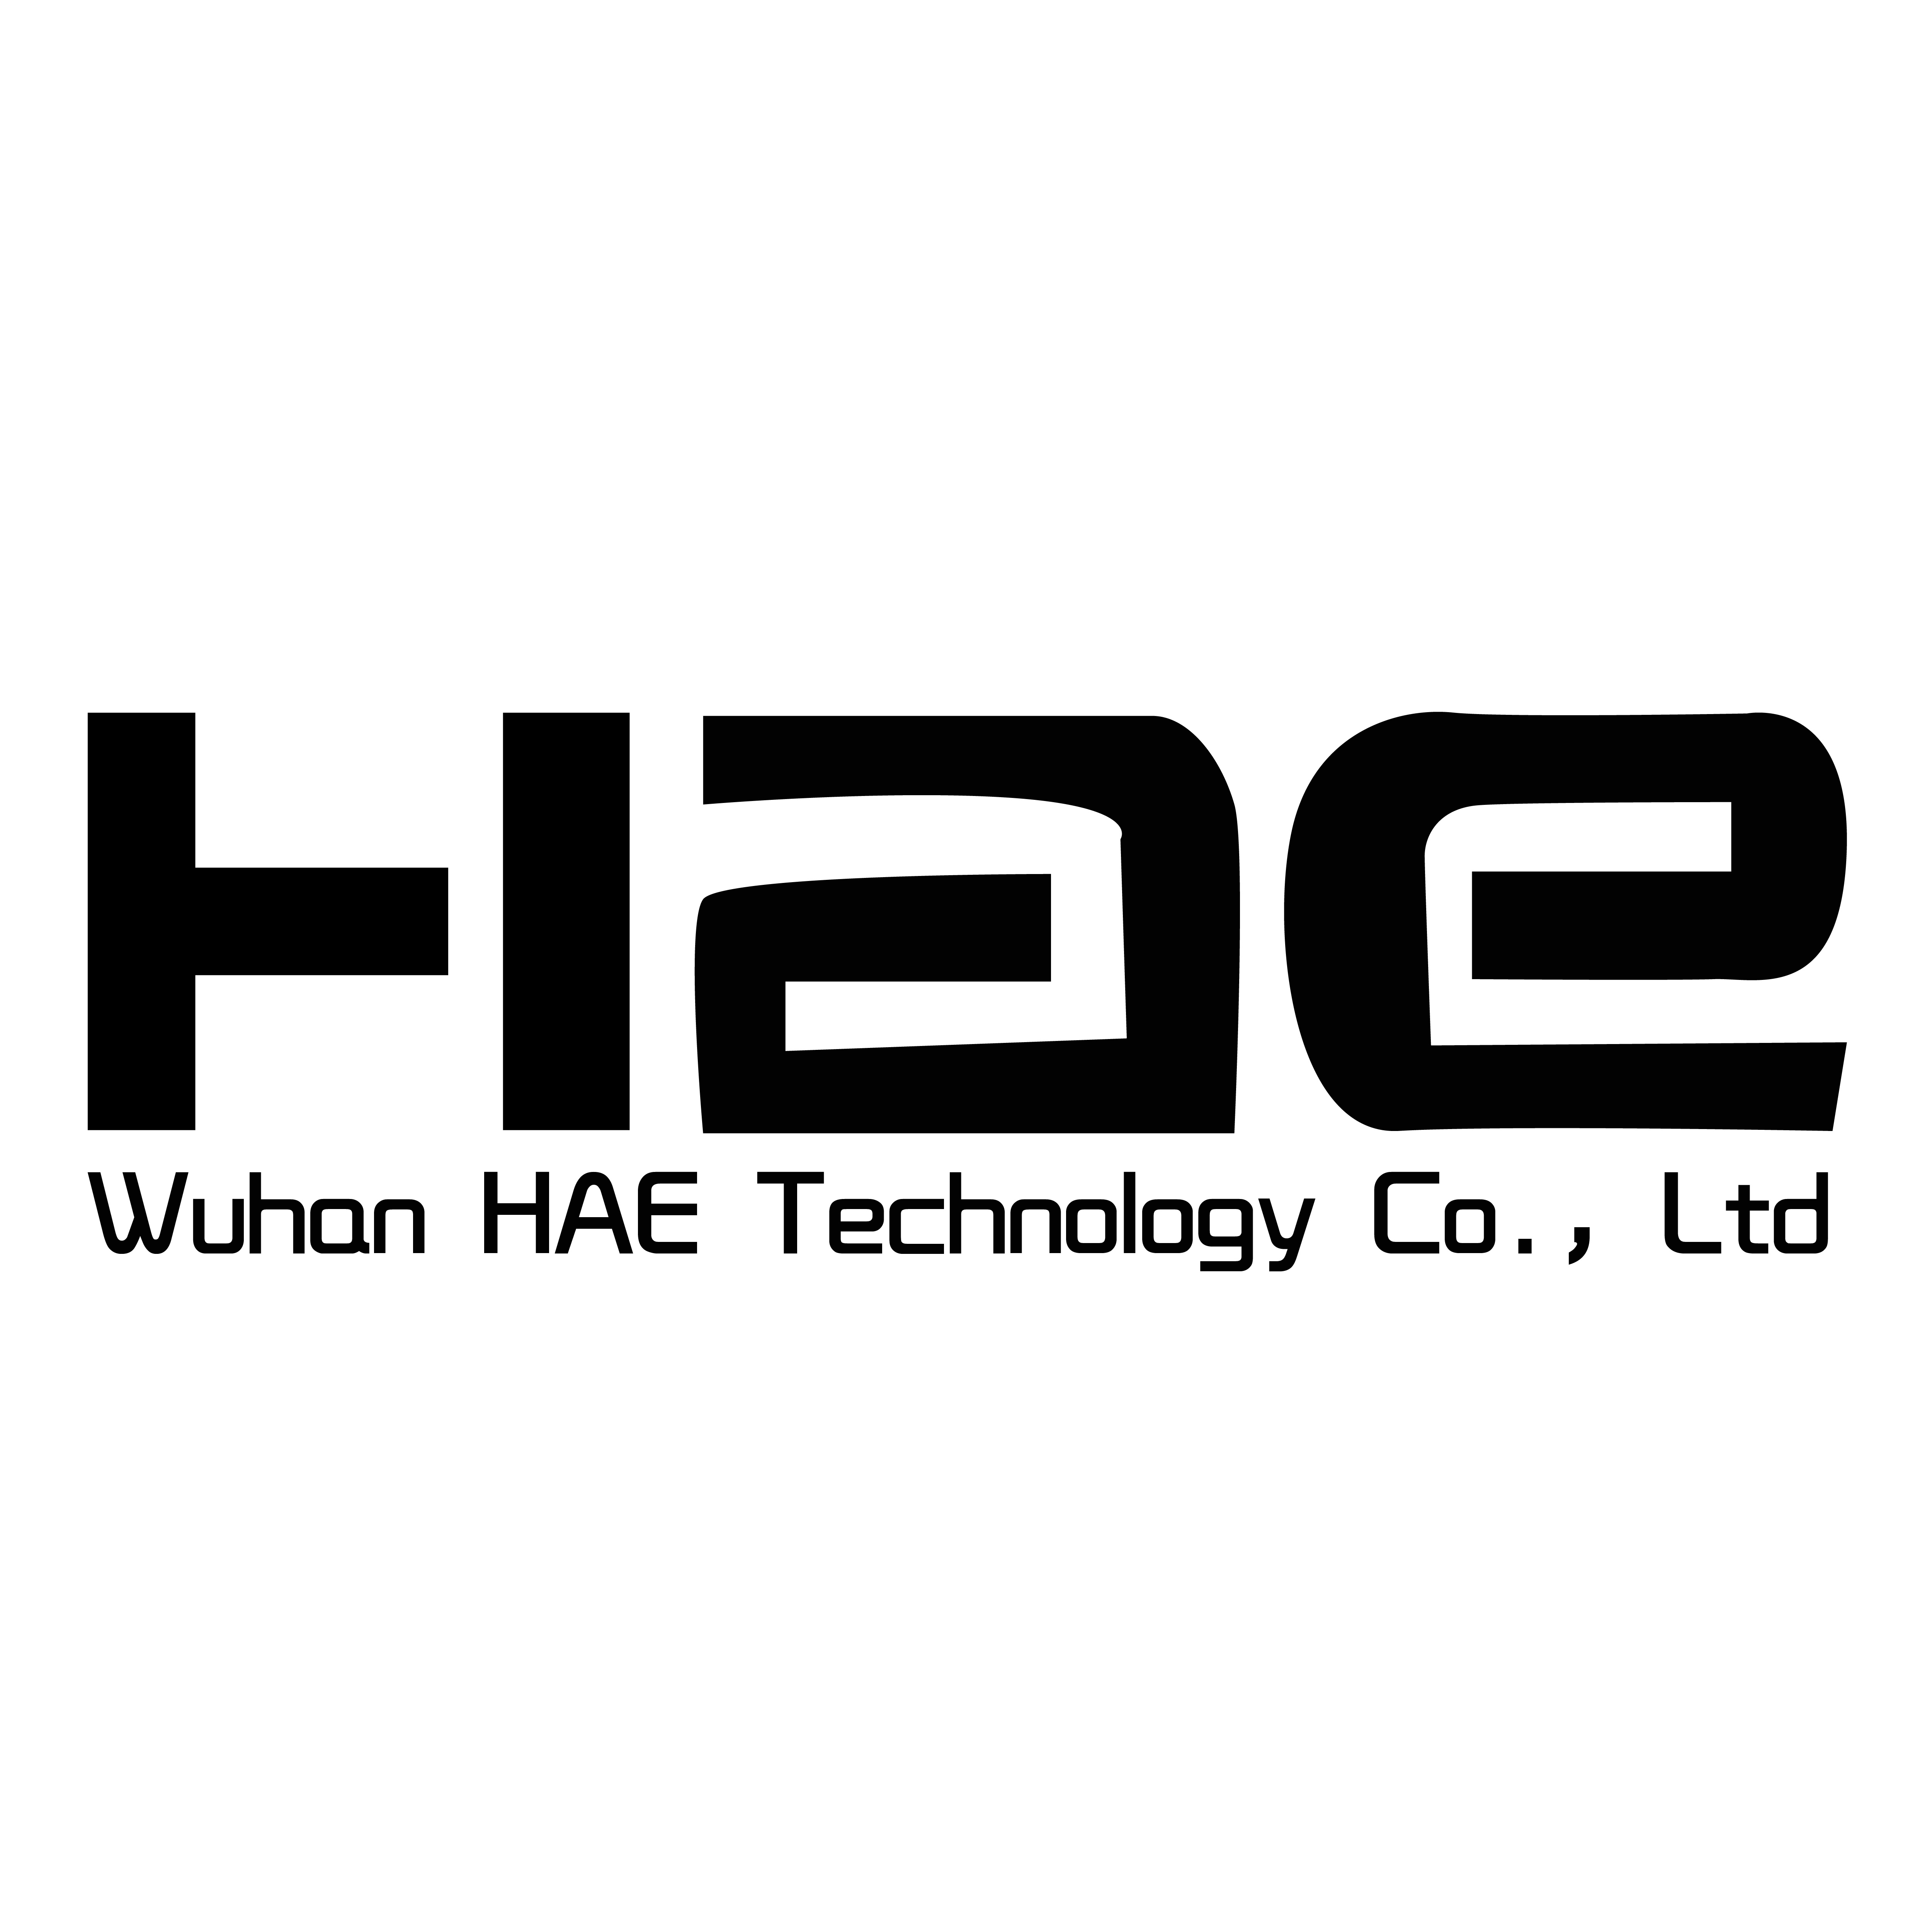 Wuhan HAE Technology Co., Ltd.